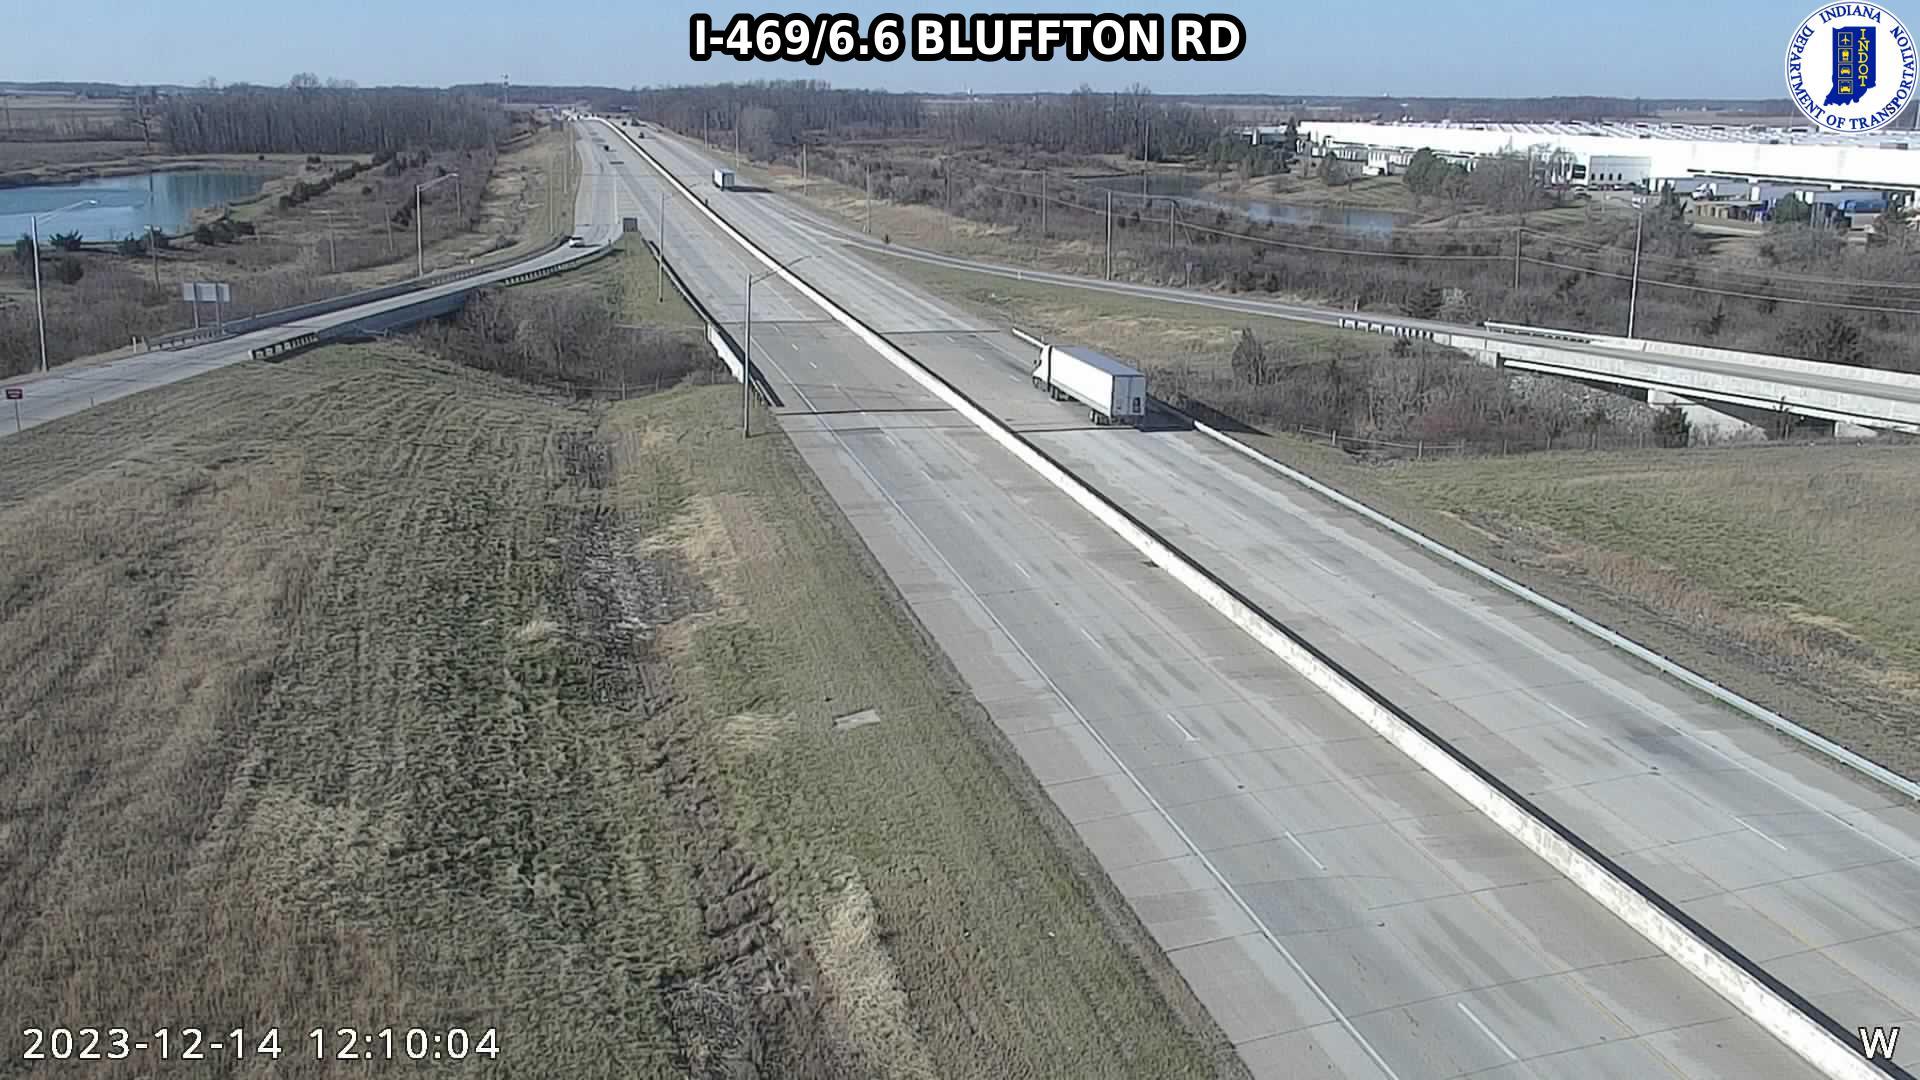 Traffic Cam Blair: I-469: I-469/6.6 BLUFFTON RD Player